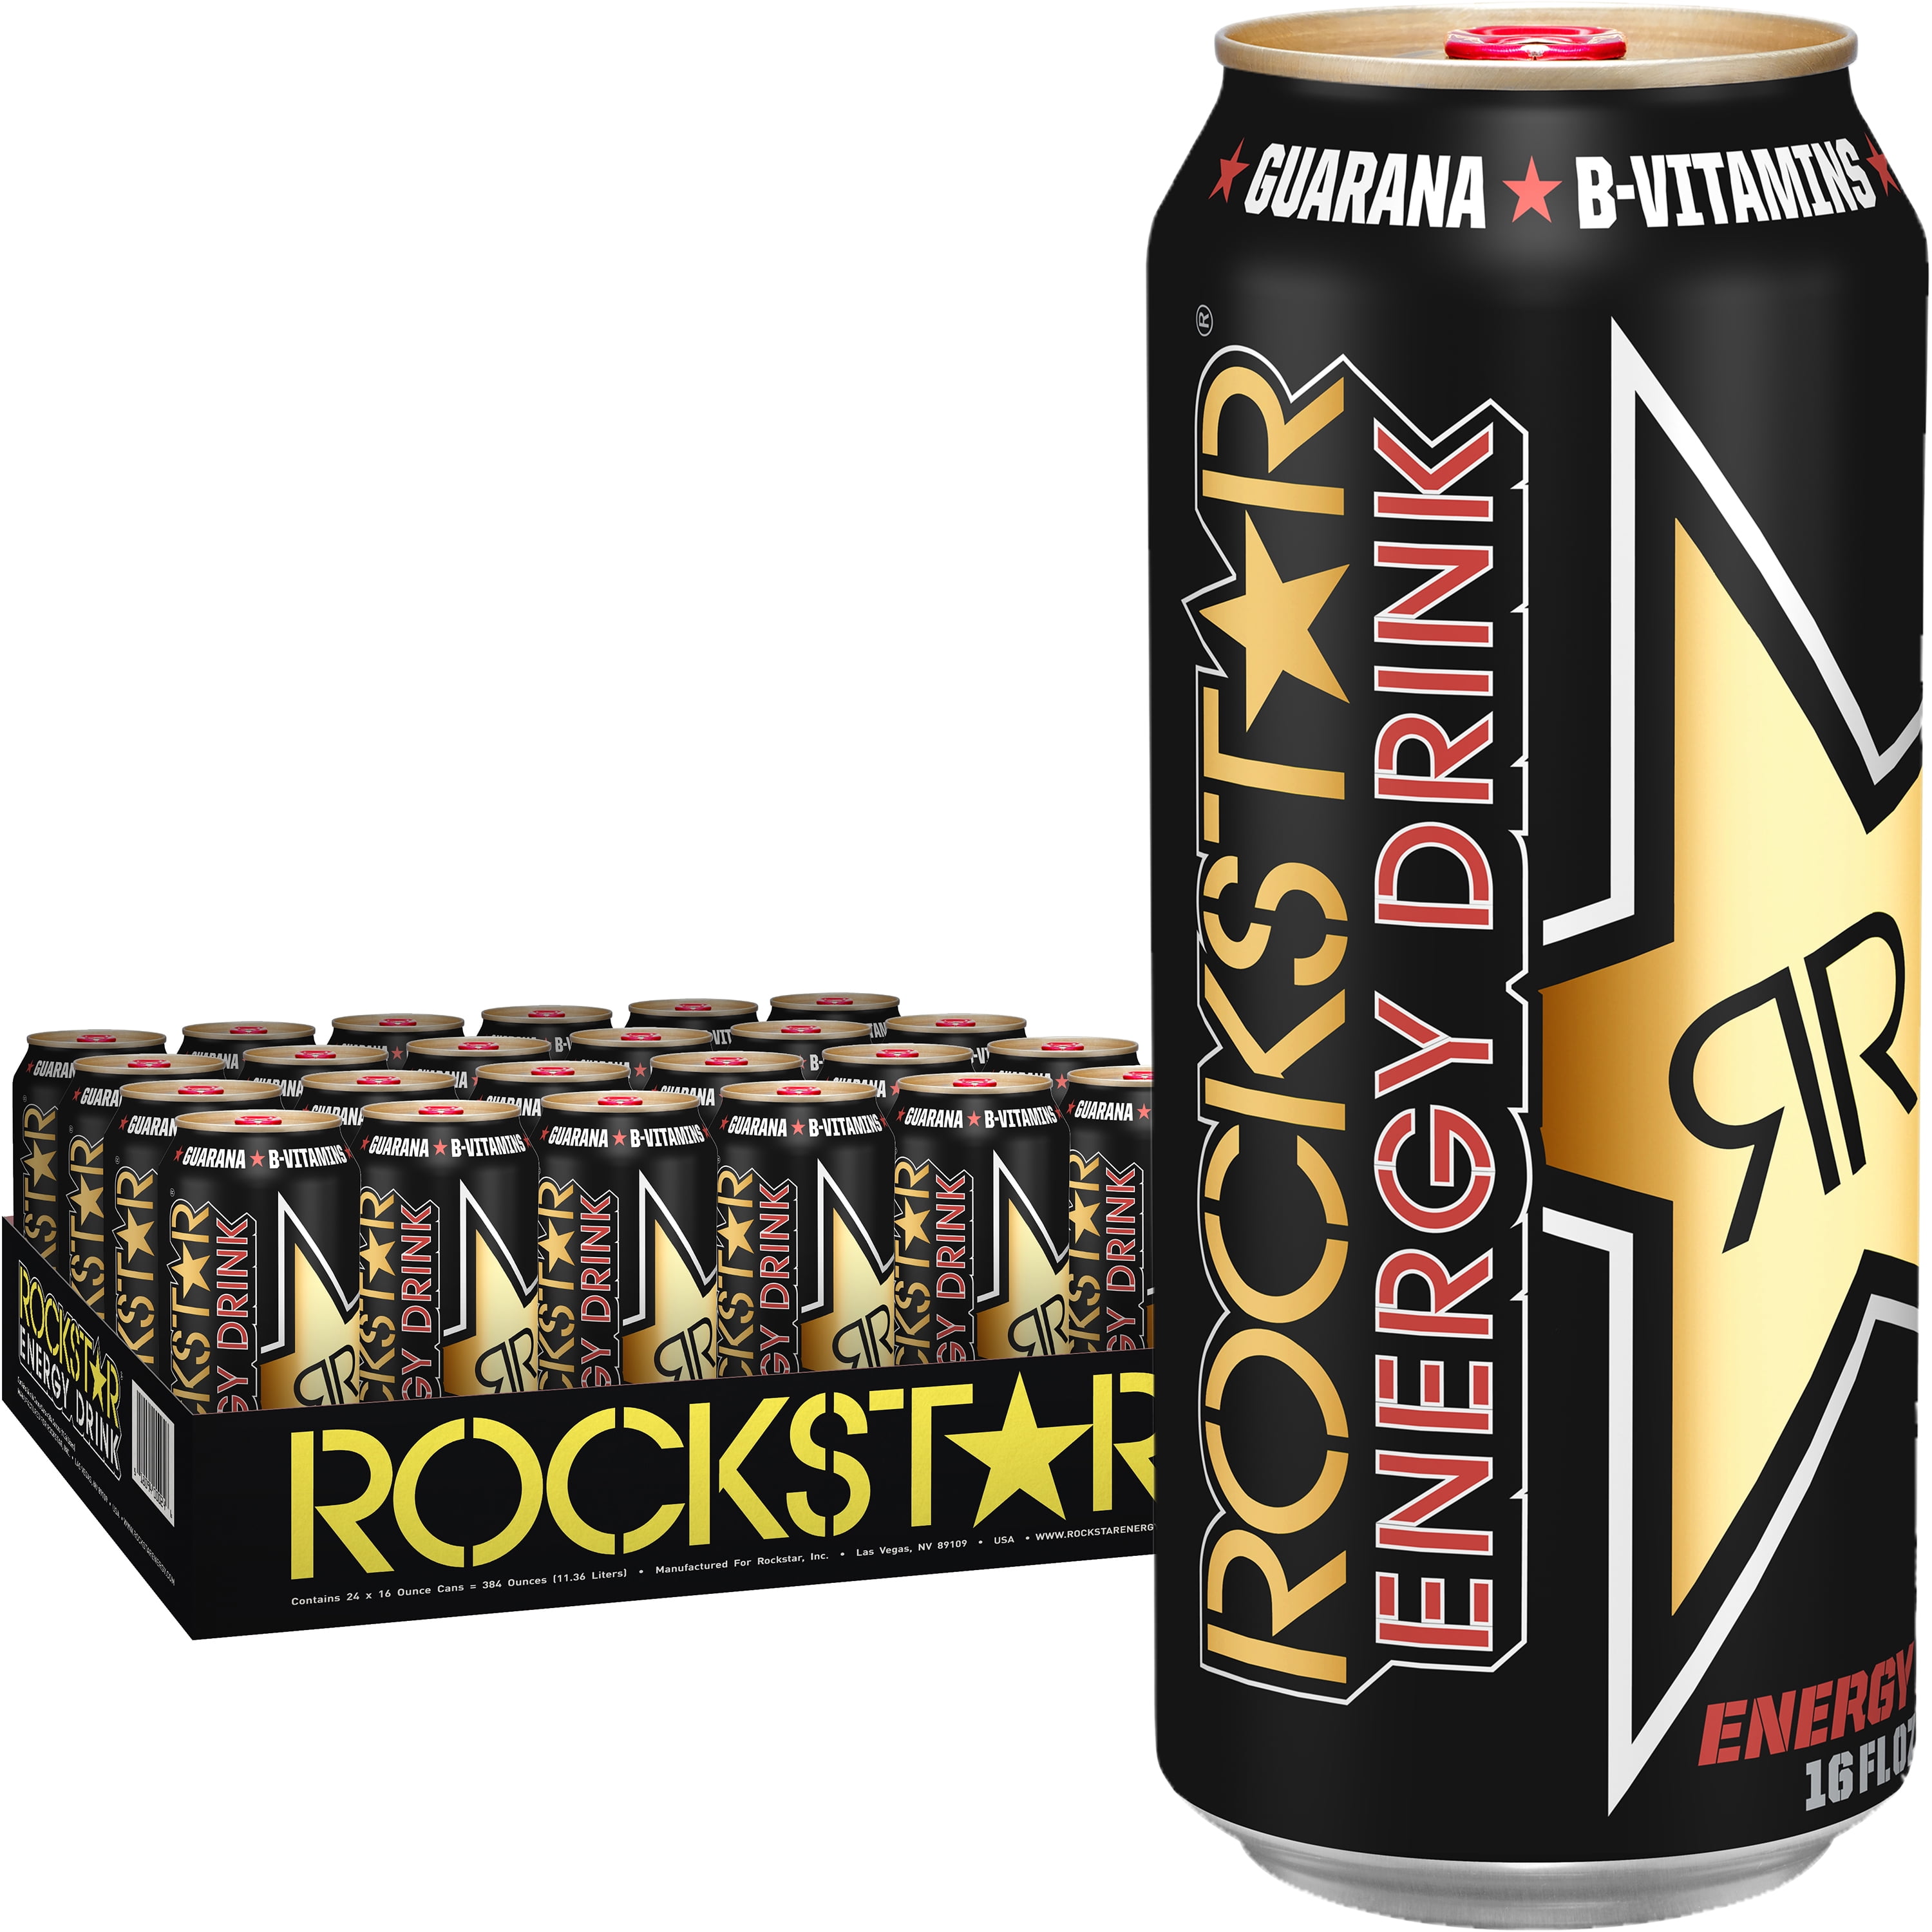 Download (24 Cans) Rockstar Original Energy Drink, 16 fl oz ...